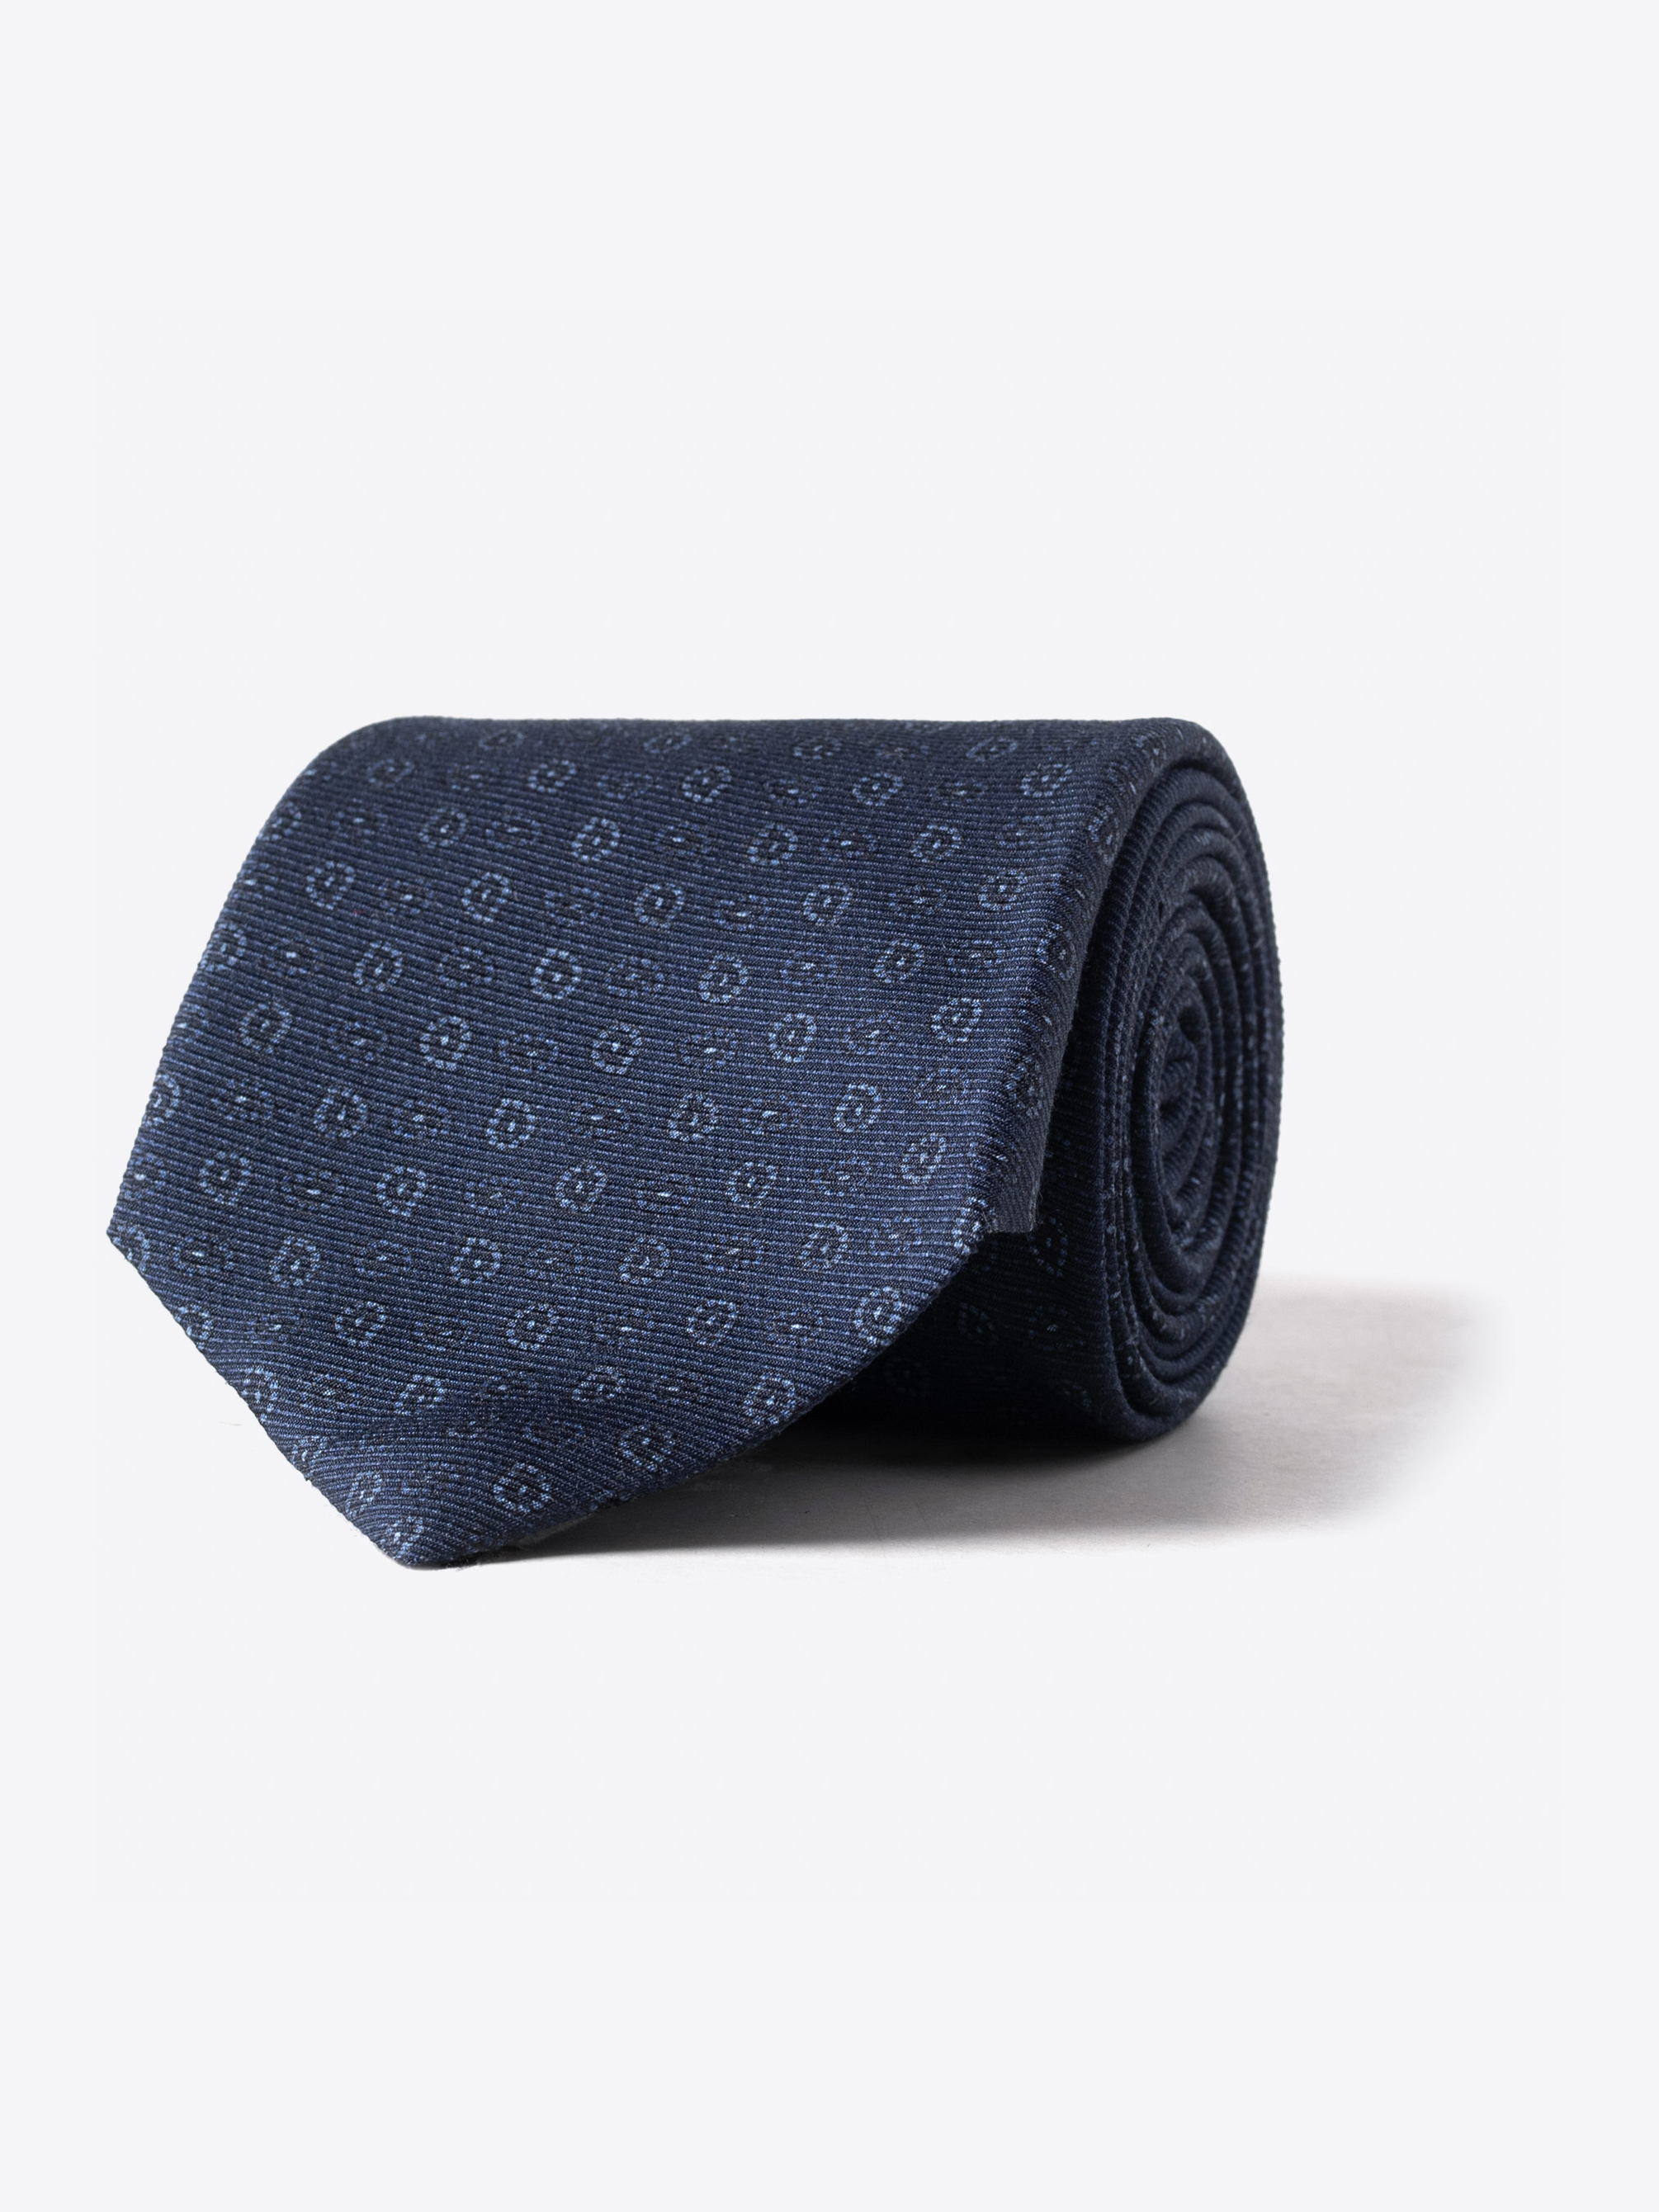 Zoom Image of Tonal Blue Small Paisley Print Tie